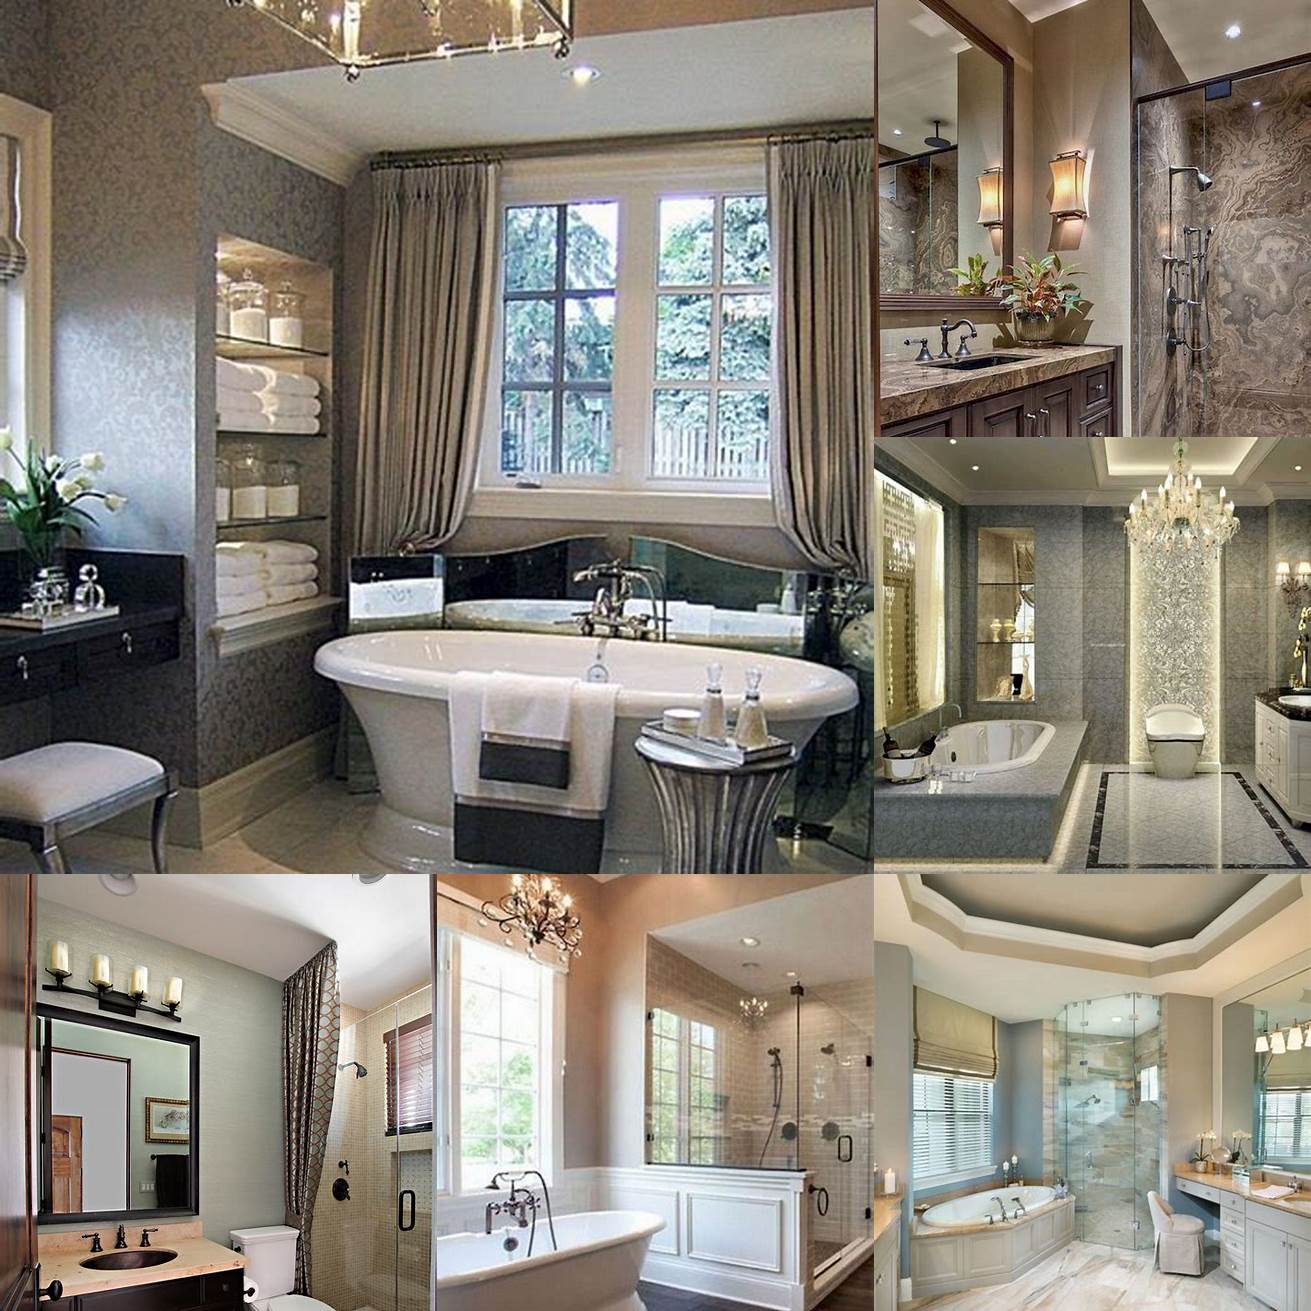 1 Elegant design that complements any bathroom décor